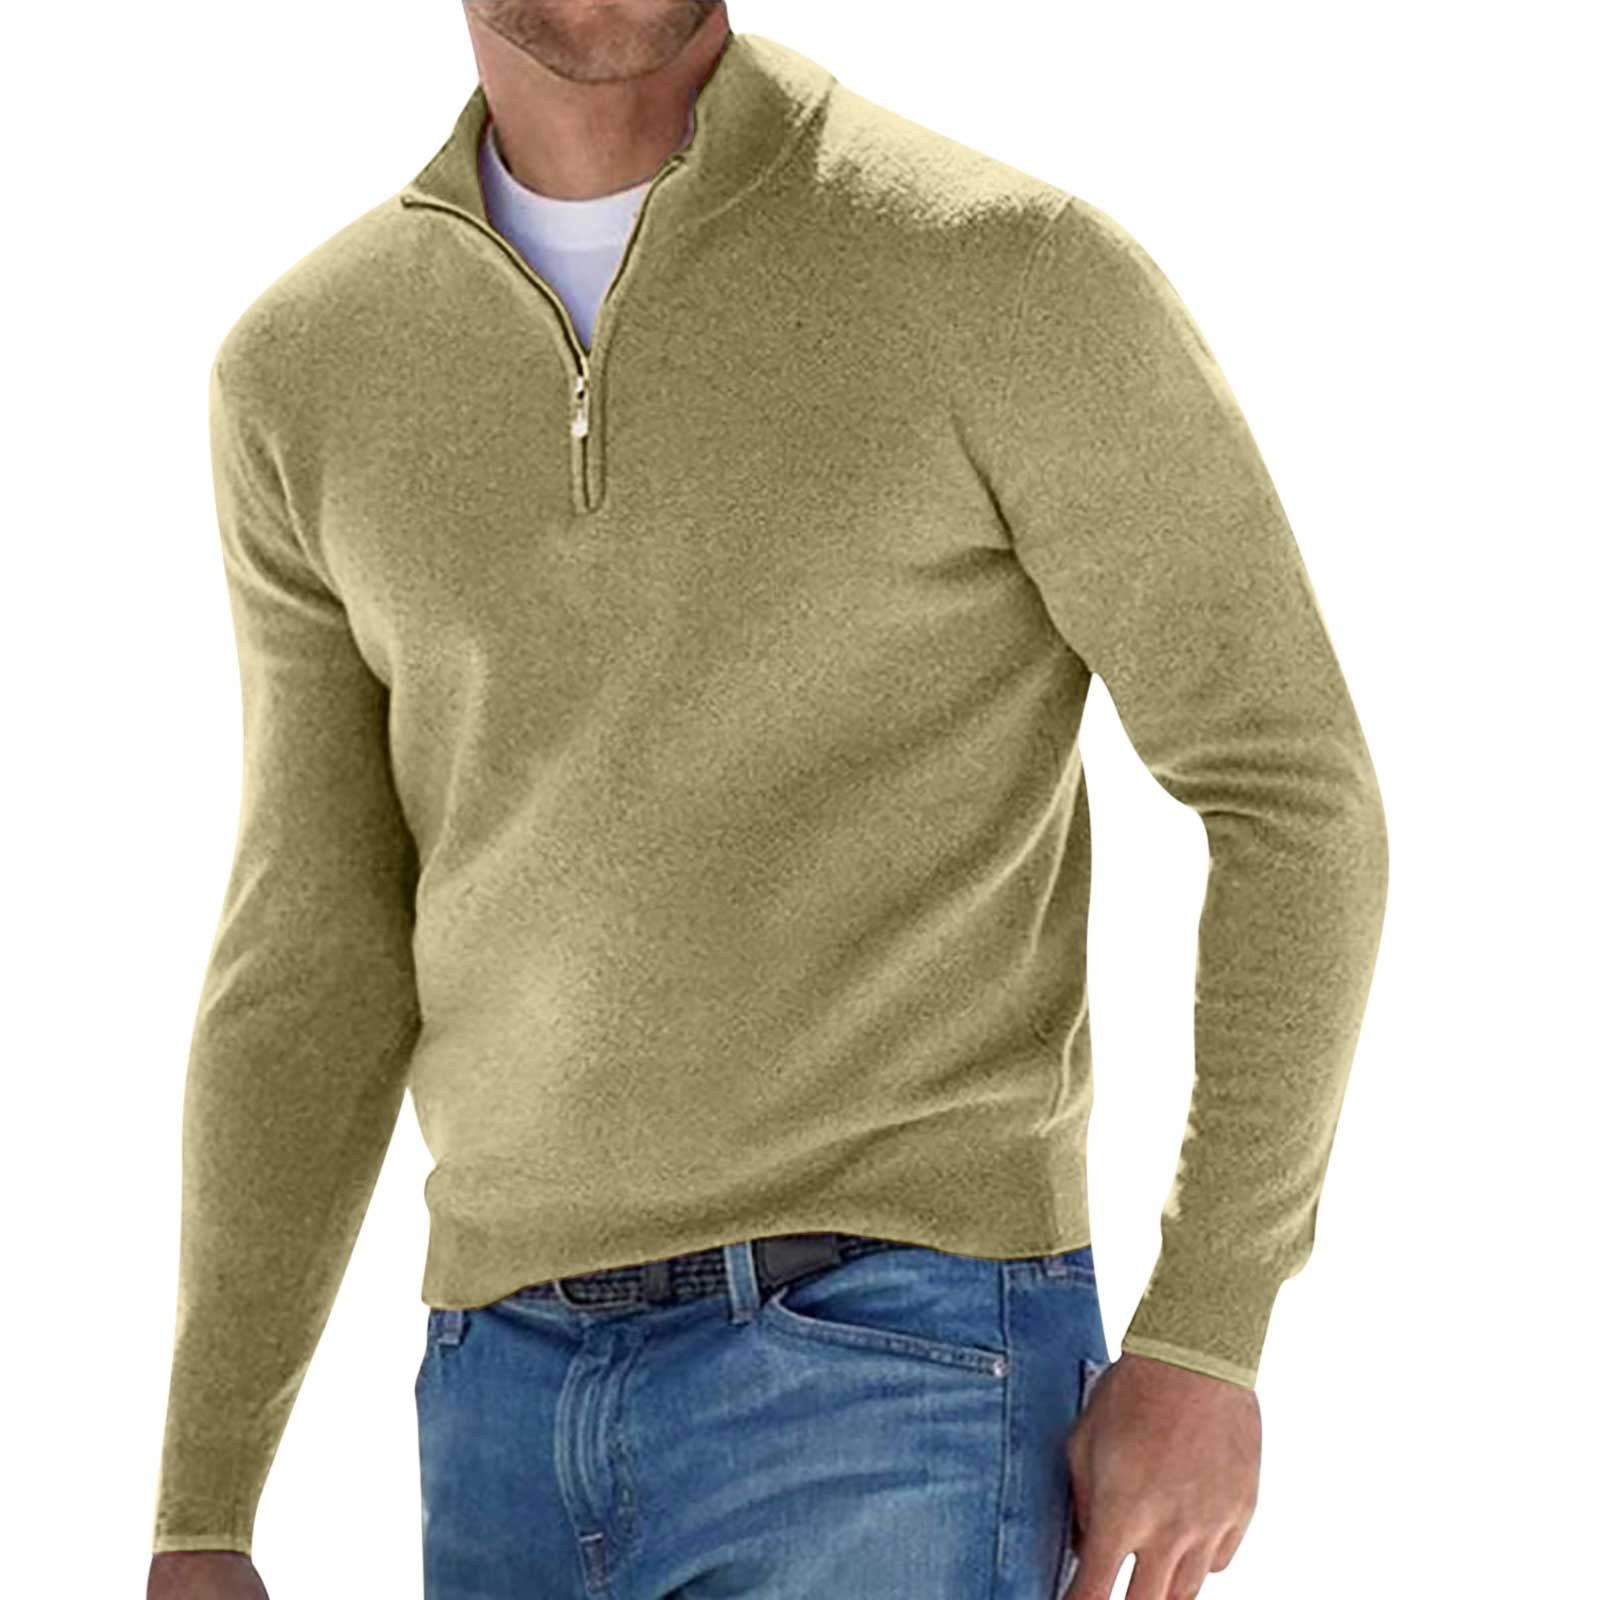 YYDGH Men's Basic Zipped Sweater, Men's Long-Sleeve Quarter-Zip Fleece  Sweatshirt, Stand-Up Collar Outdoor Athletic Pullover(Beige,XXL)